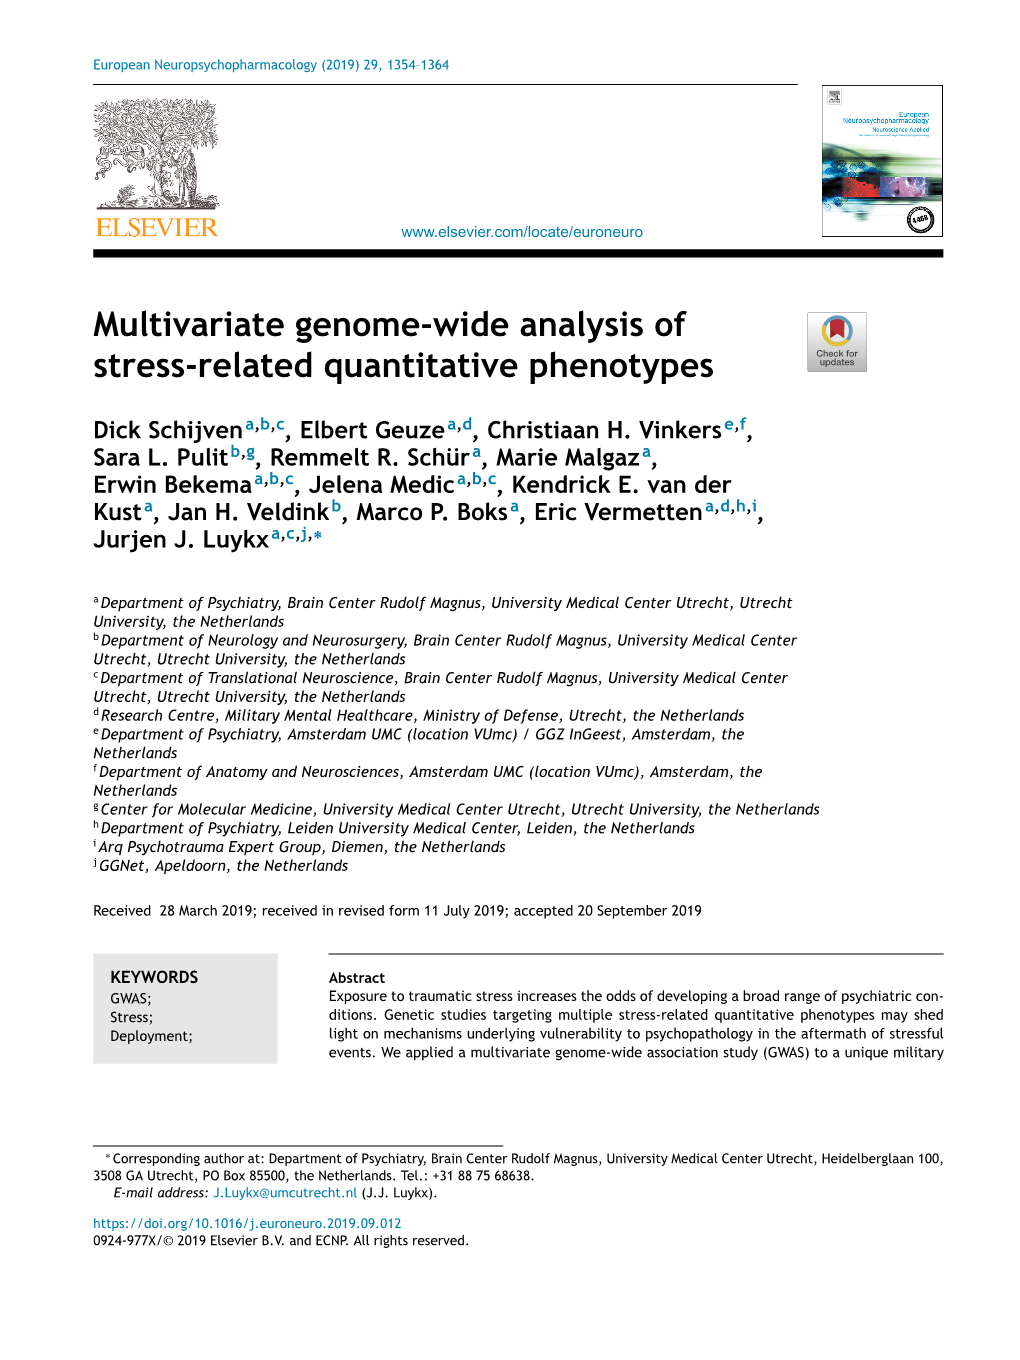 Multivariate Genome-Wide Analysis of Stress-Related Quantitative Phenotypes